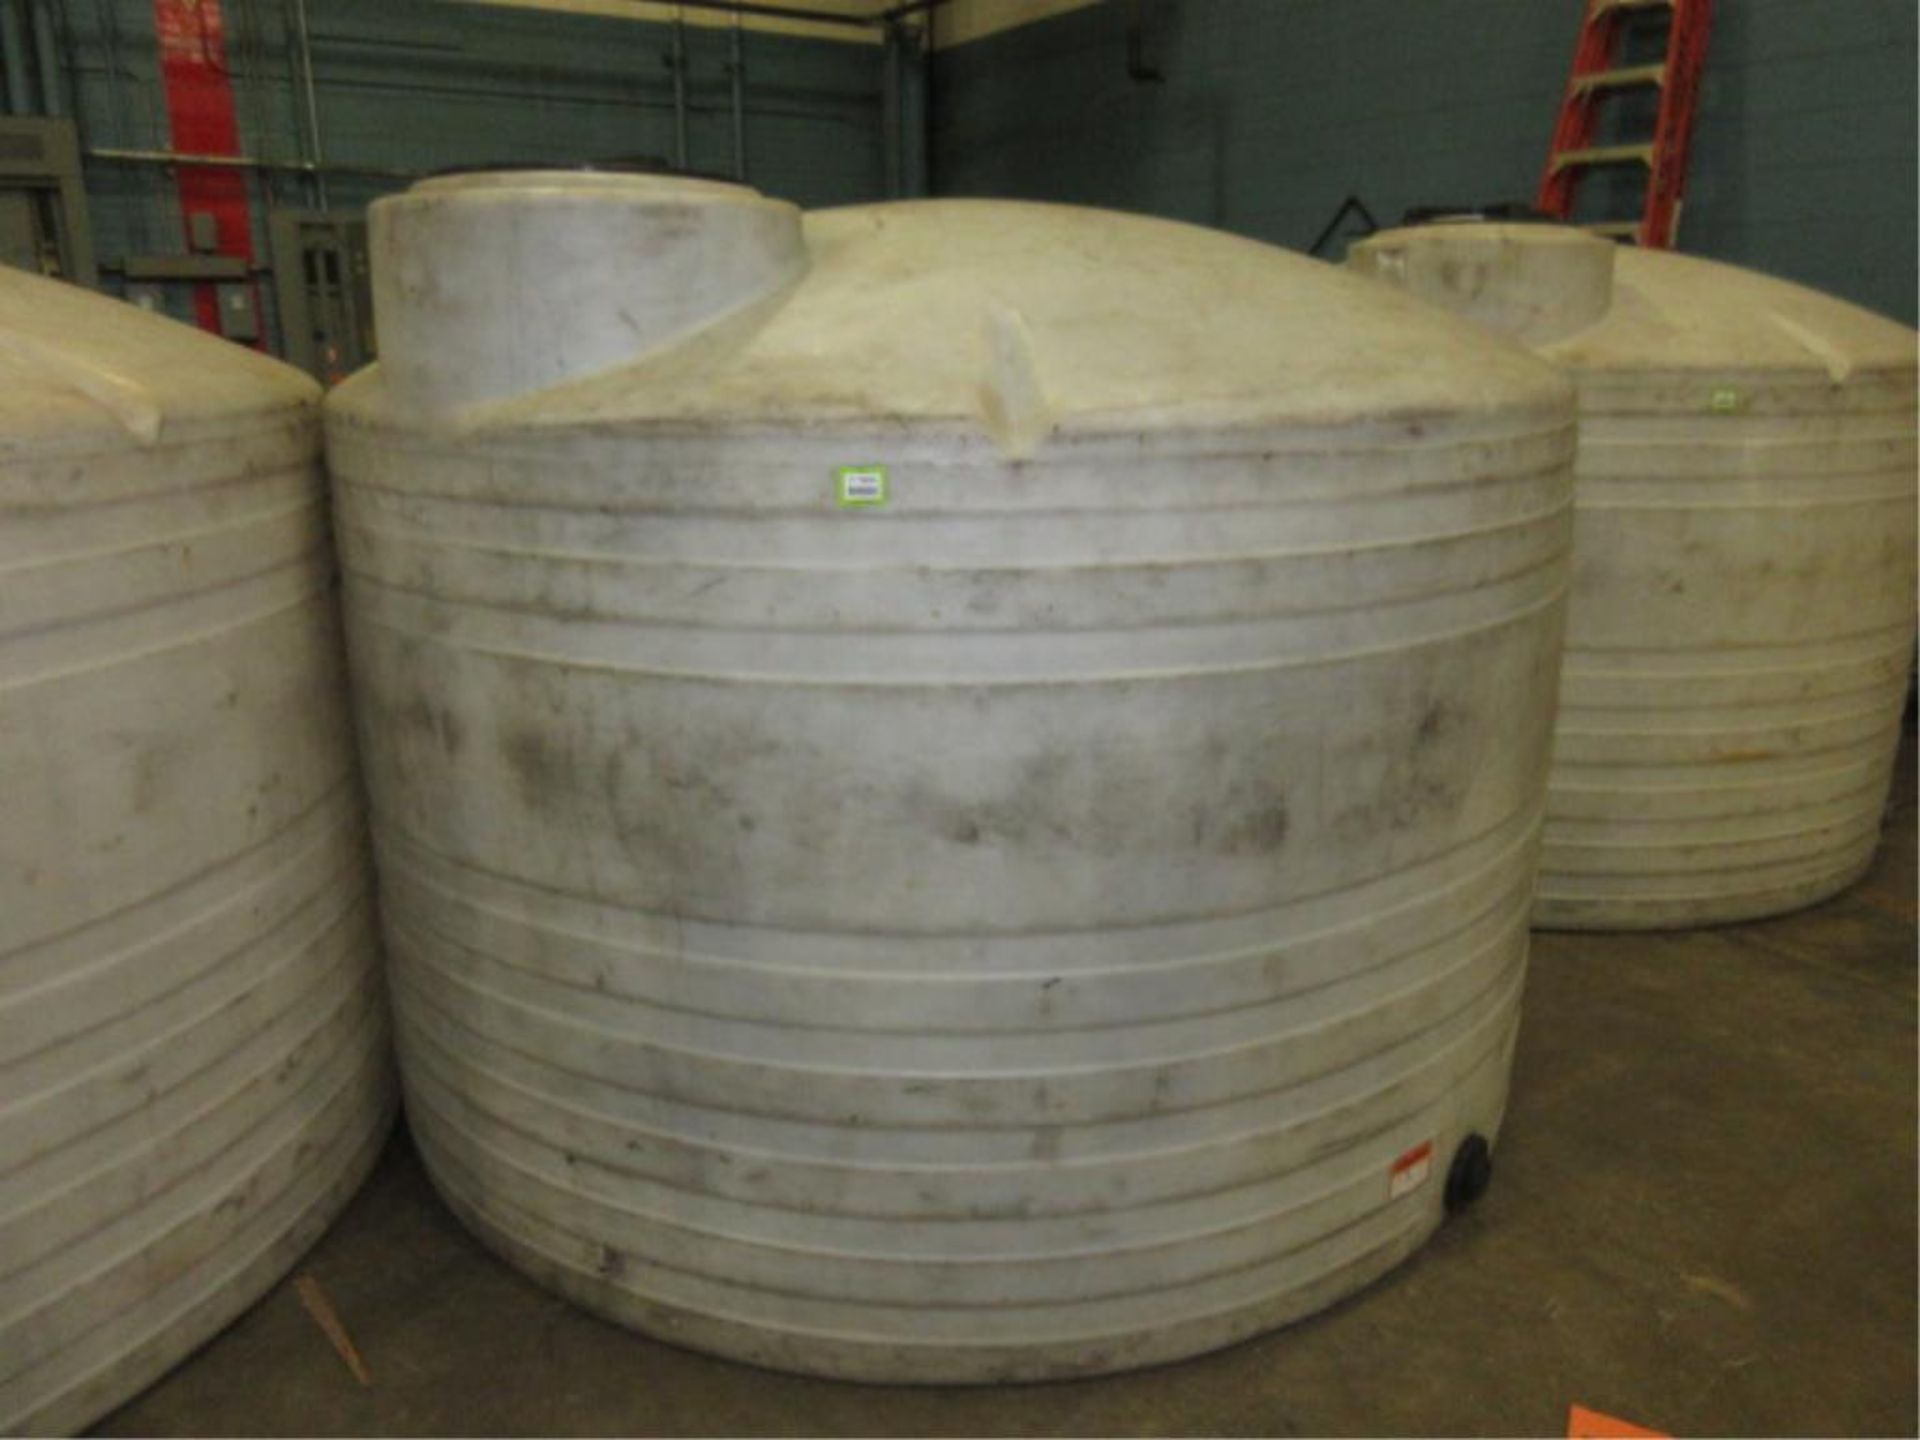 Poly Storage Tank. Poly Storage Tank, 1500 gallon capacity, 8' dia. HIT# 2179856. Loc: warehouse.